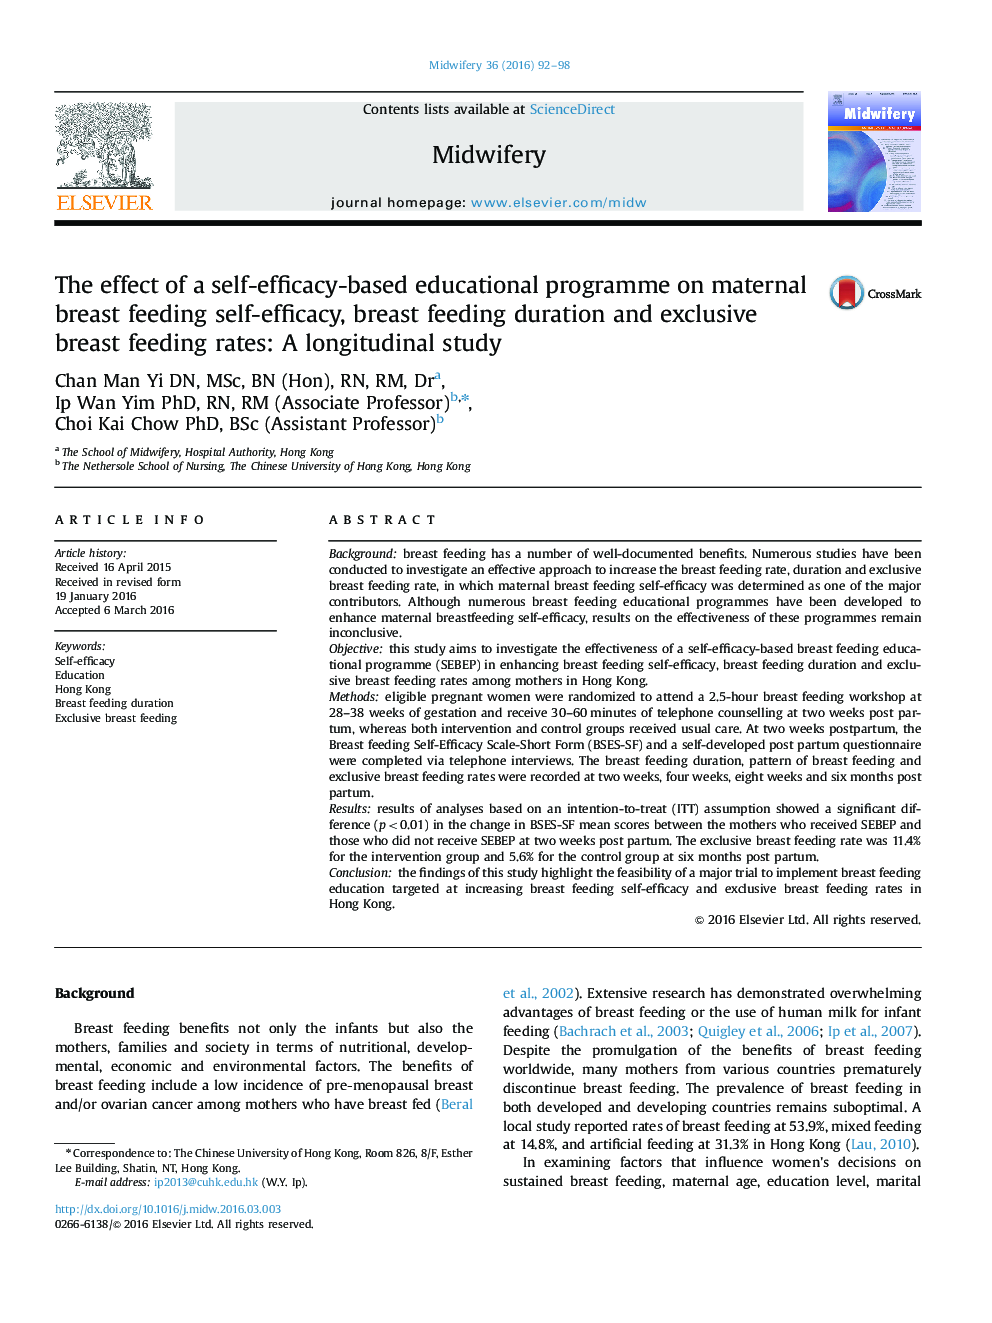 The effect of a self-efficacy-based educational programme on maternal breast feeding self-efficacy, breast feeding duration and exclusive breast feeding rates: A longitudinal study